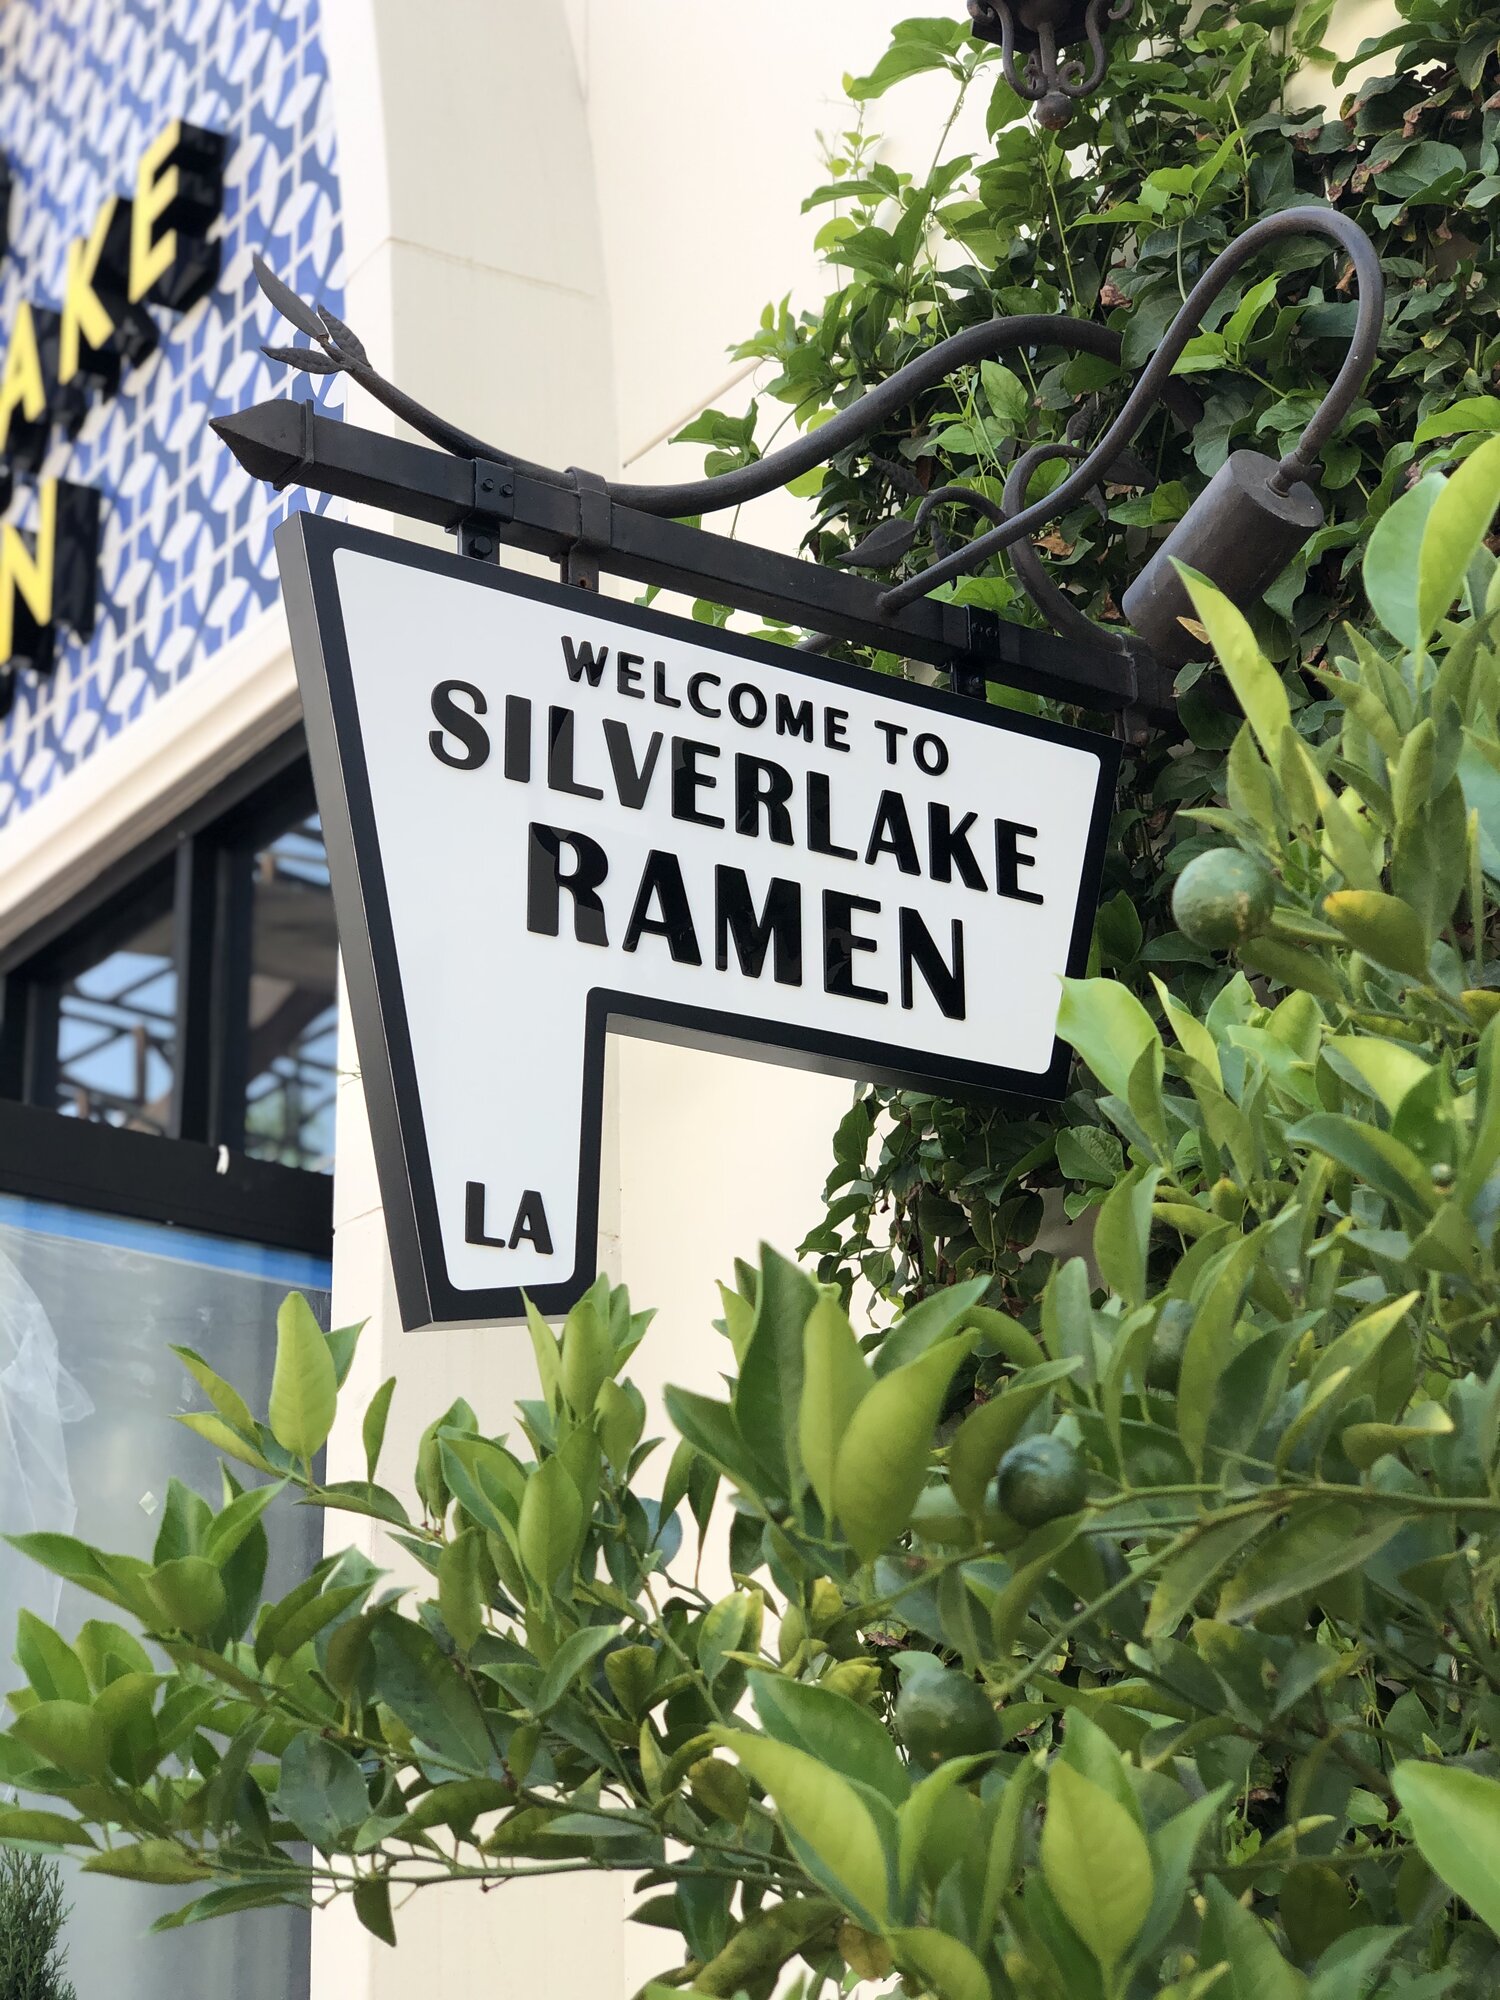 Silverlake Ramen opens in Rancho Cucamonga's Victoria Gardens